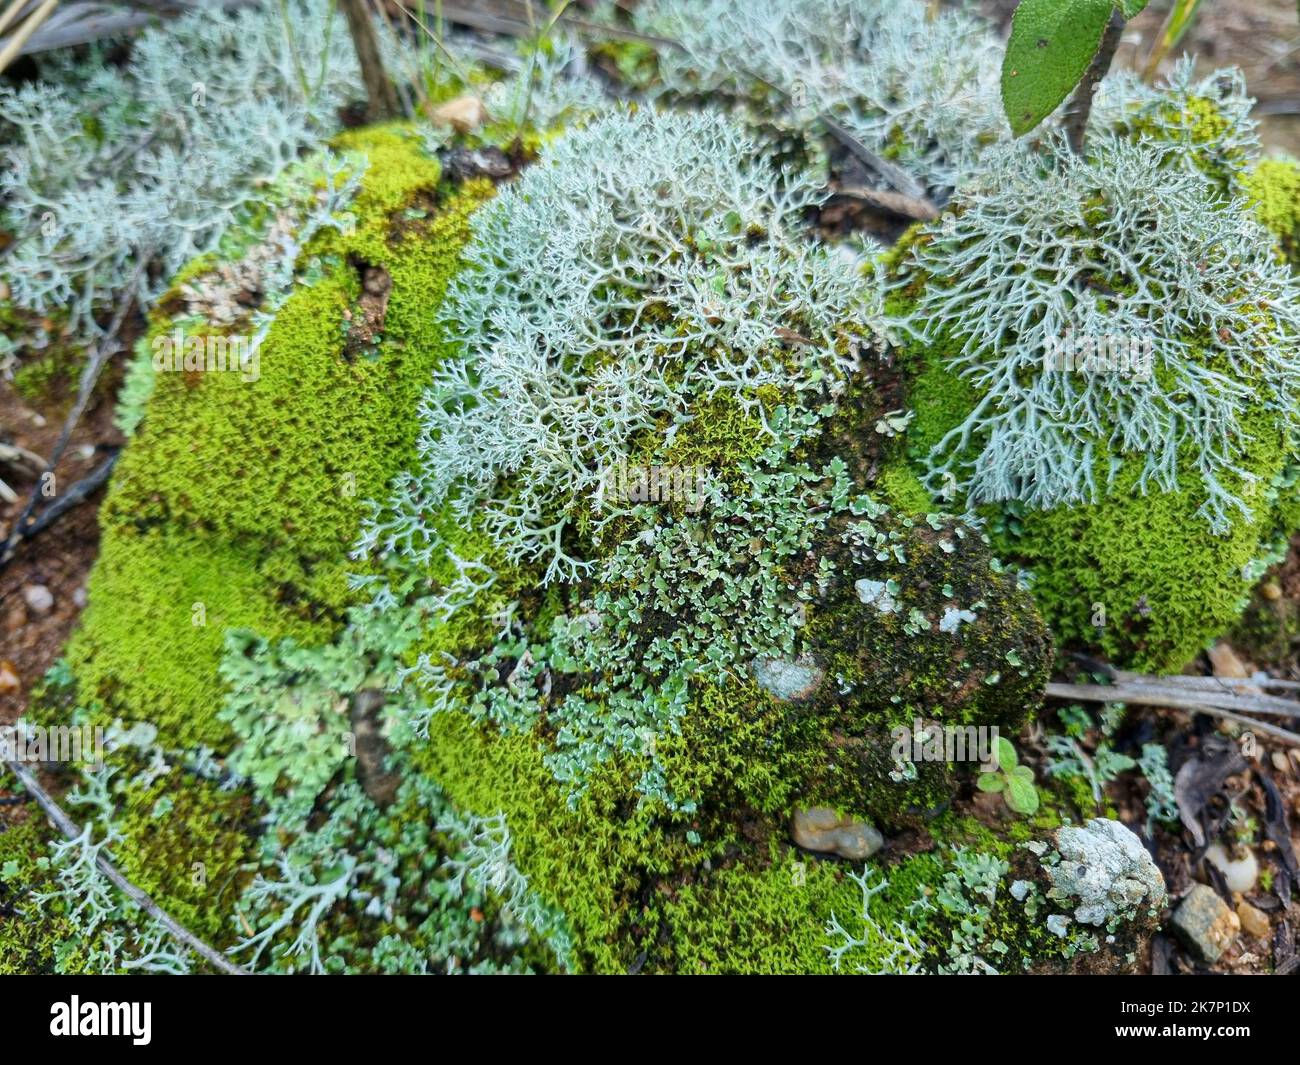 Macro vista del ecosistema de musgos de bosque de maleza, diversidad de especies naturales Foto de stock